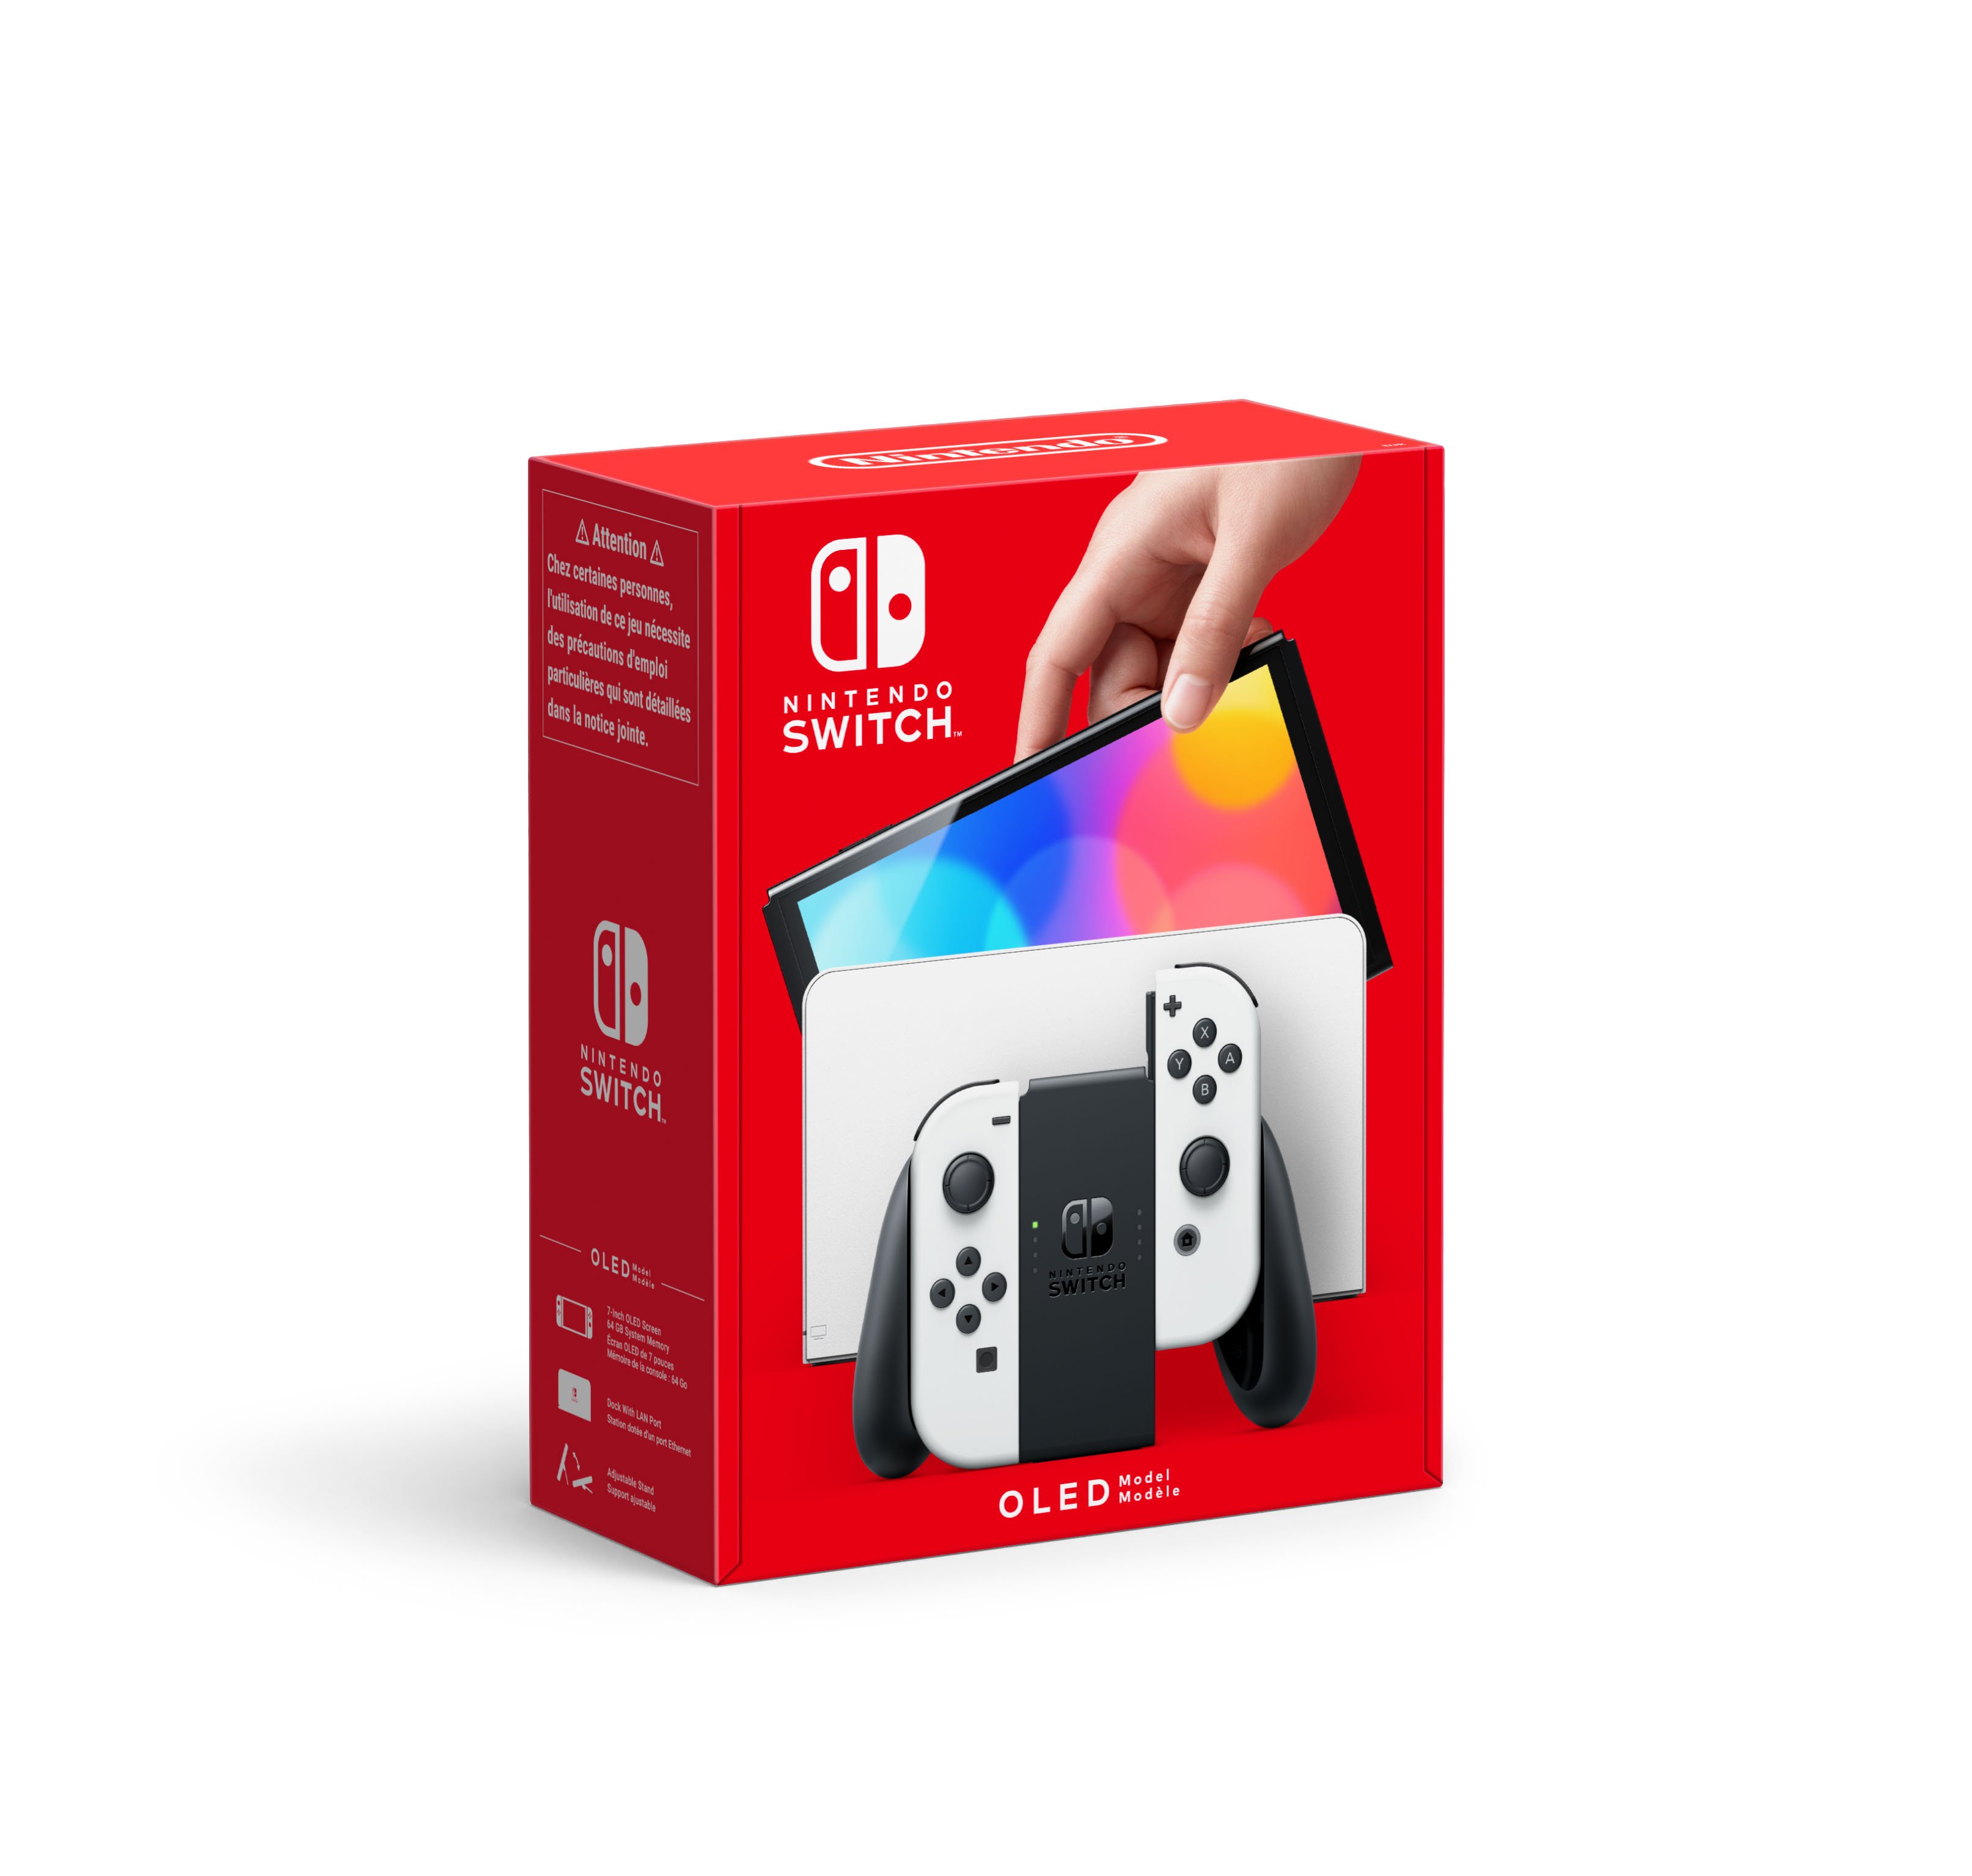 Nintendo Switch Console OLED with Joy-Con Black & White